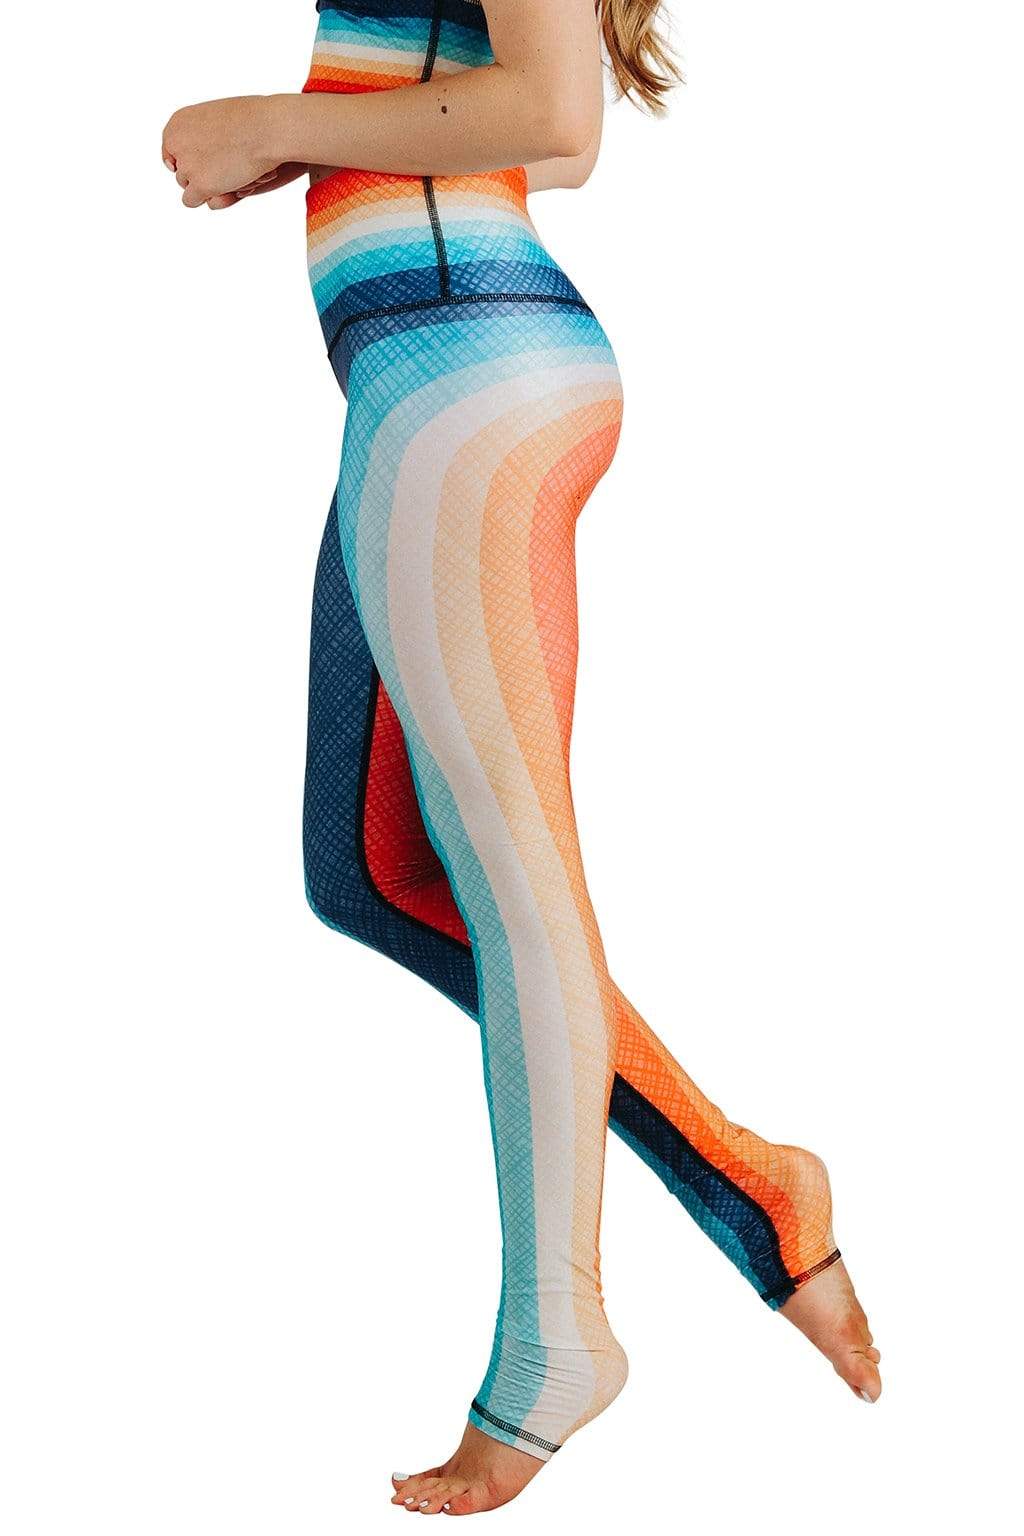 Bunny Rainbow Leggings Women, Easter Spring Printed Yoga Pants Cute Gr –  Starcove Fashion